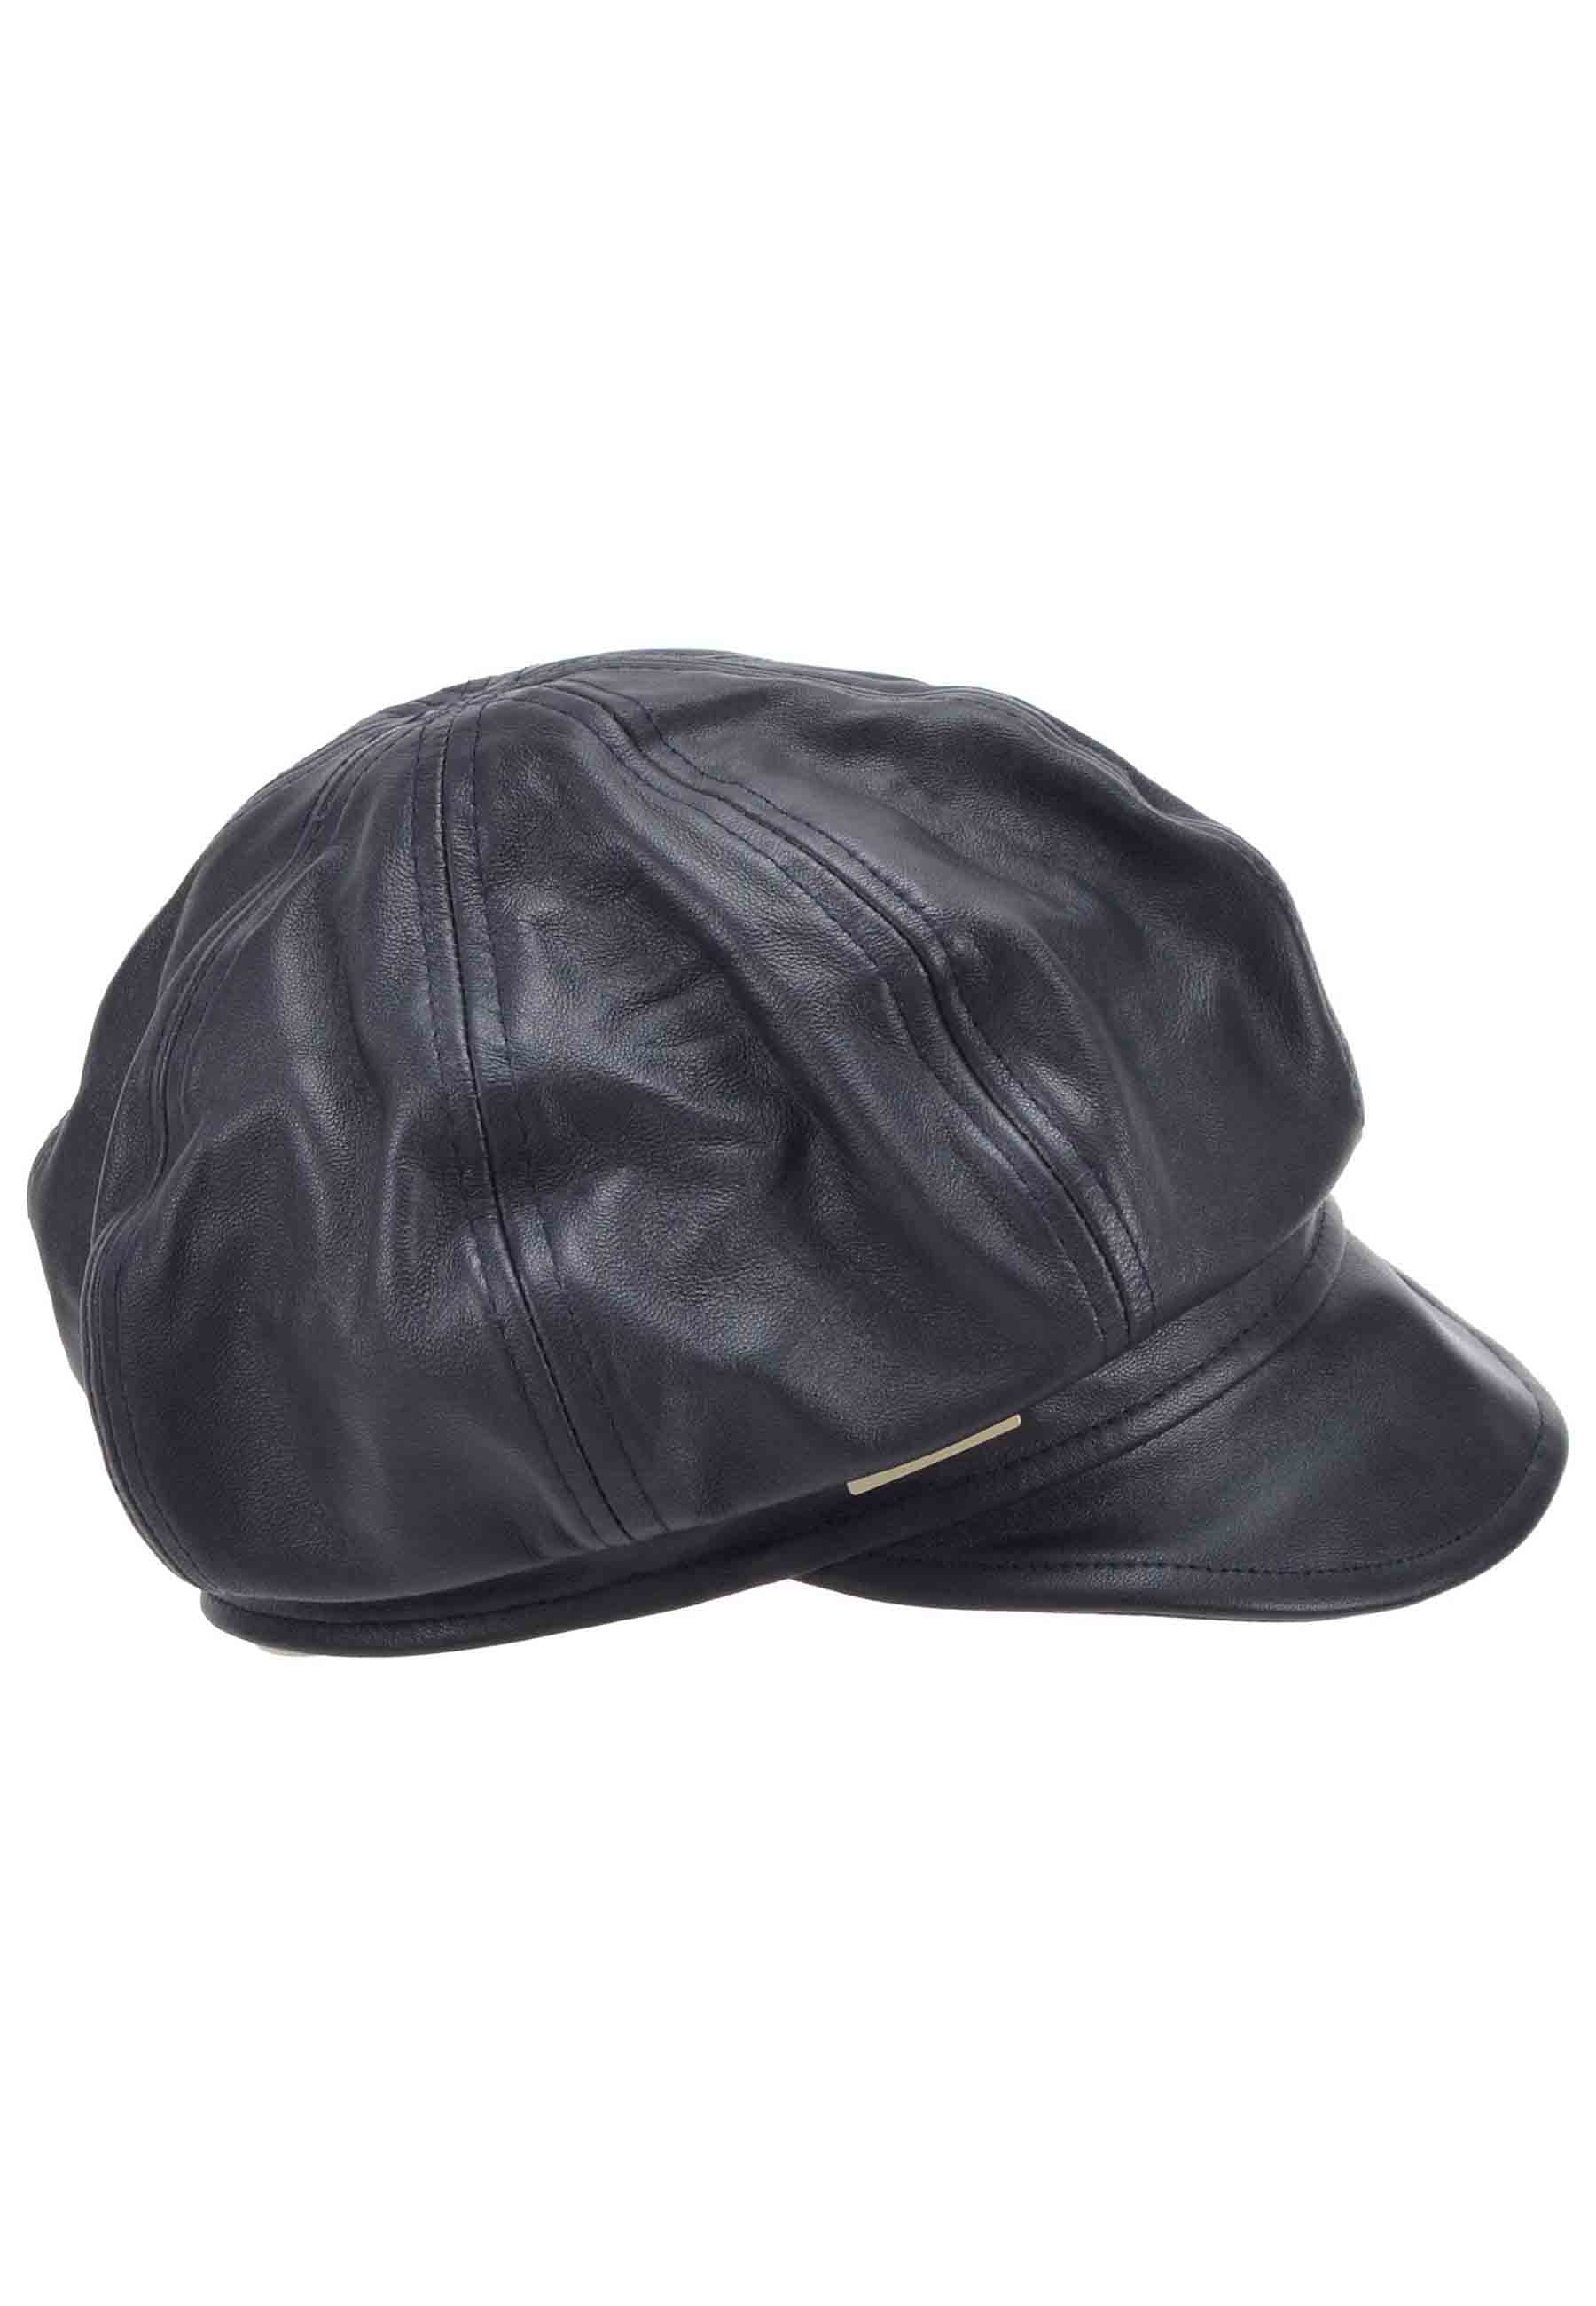 Women's black leather balloon hat